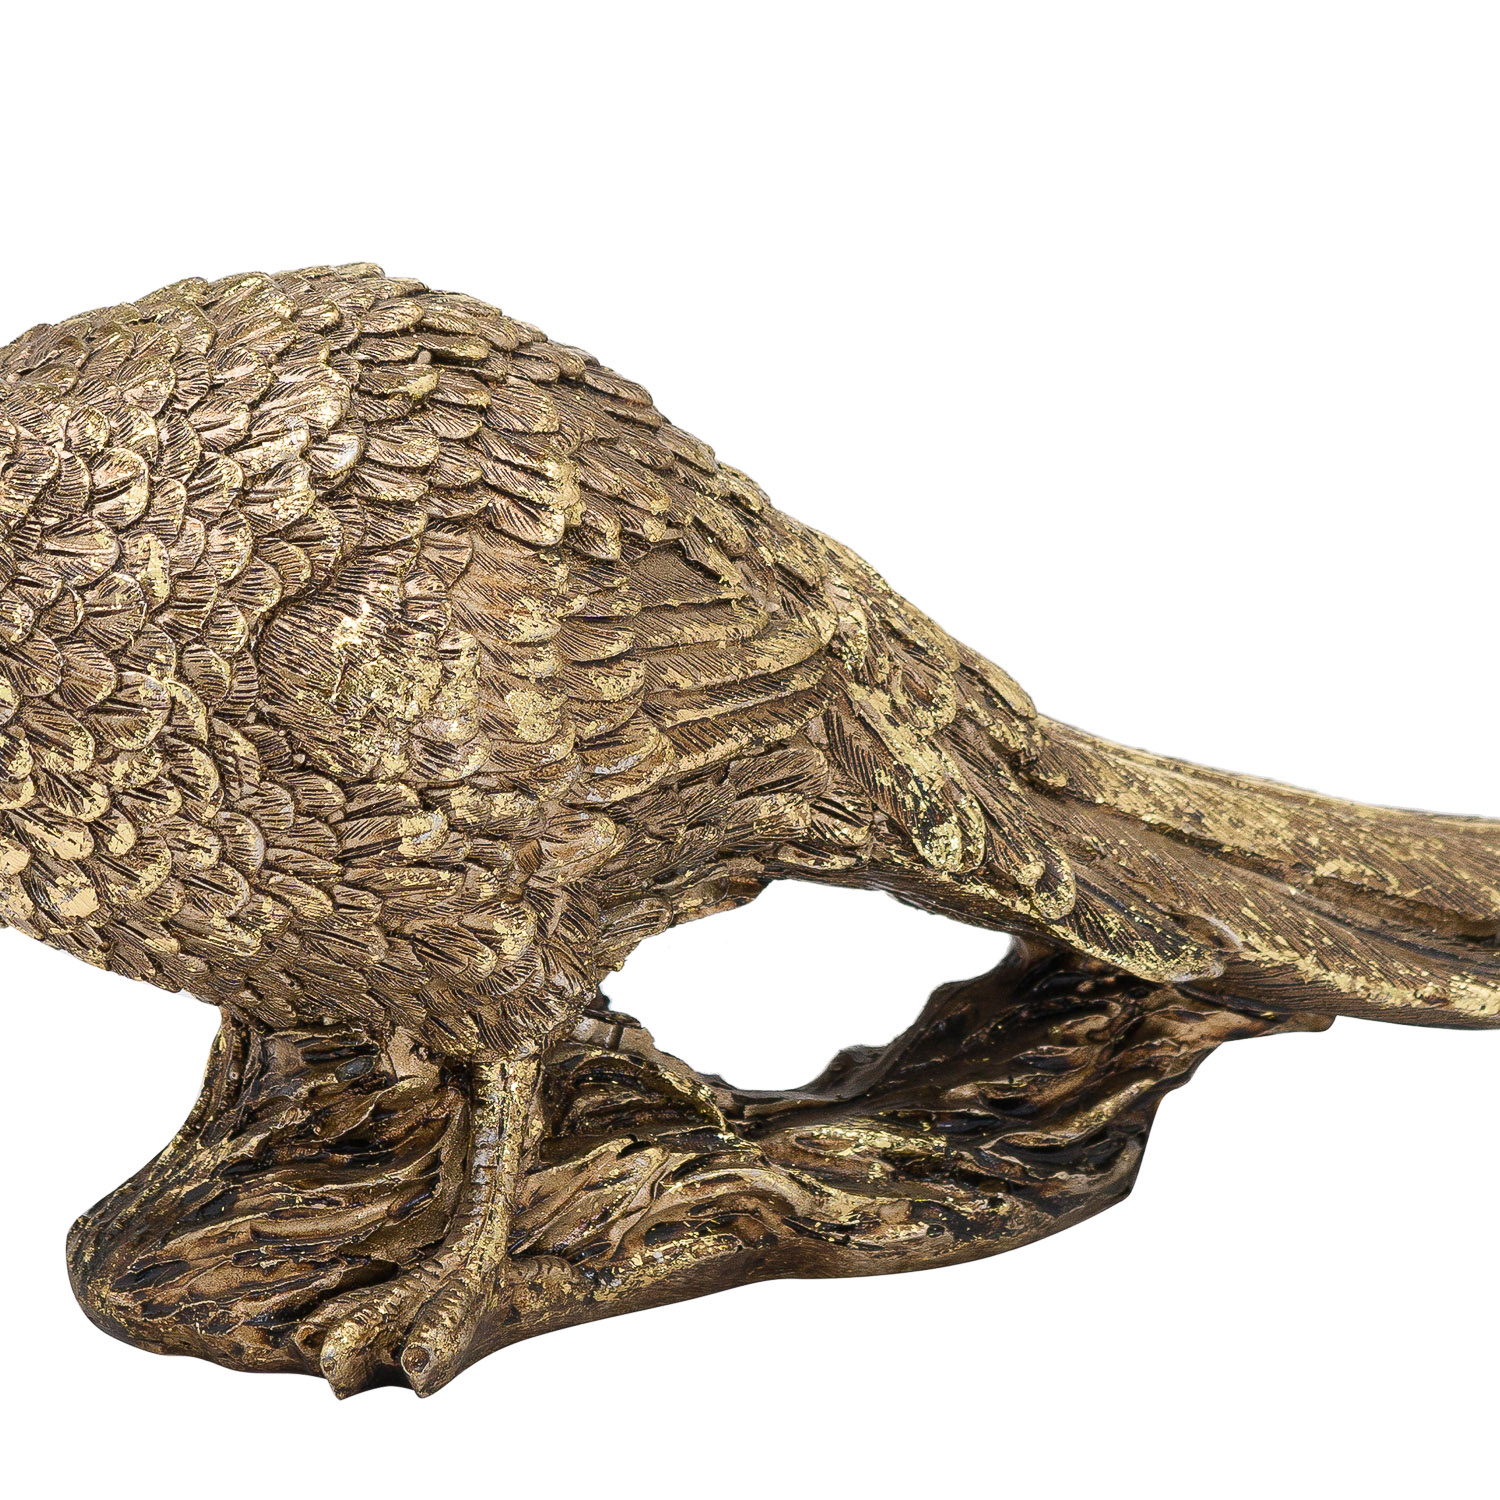 Antique Gold Pheasant Ornament - Image 2